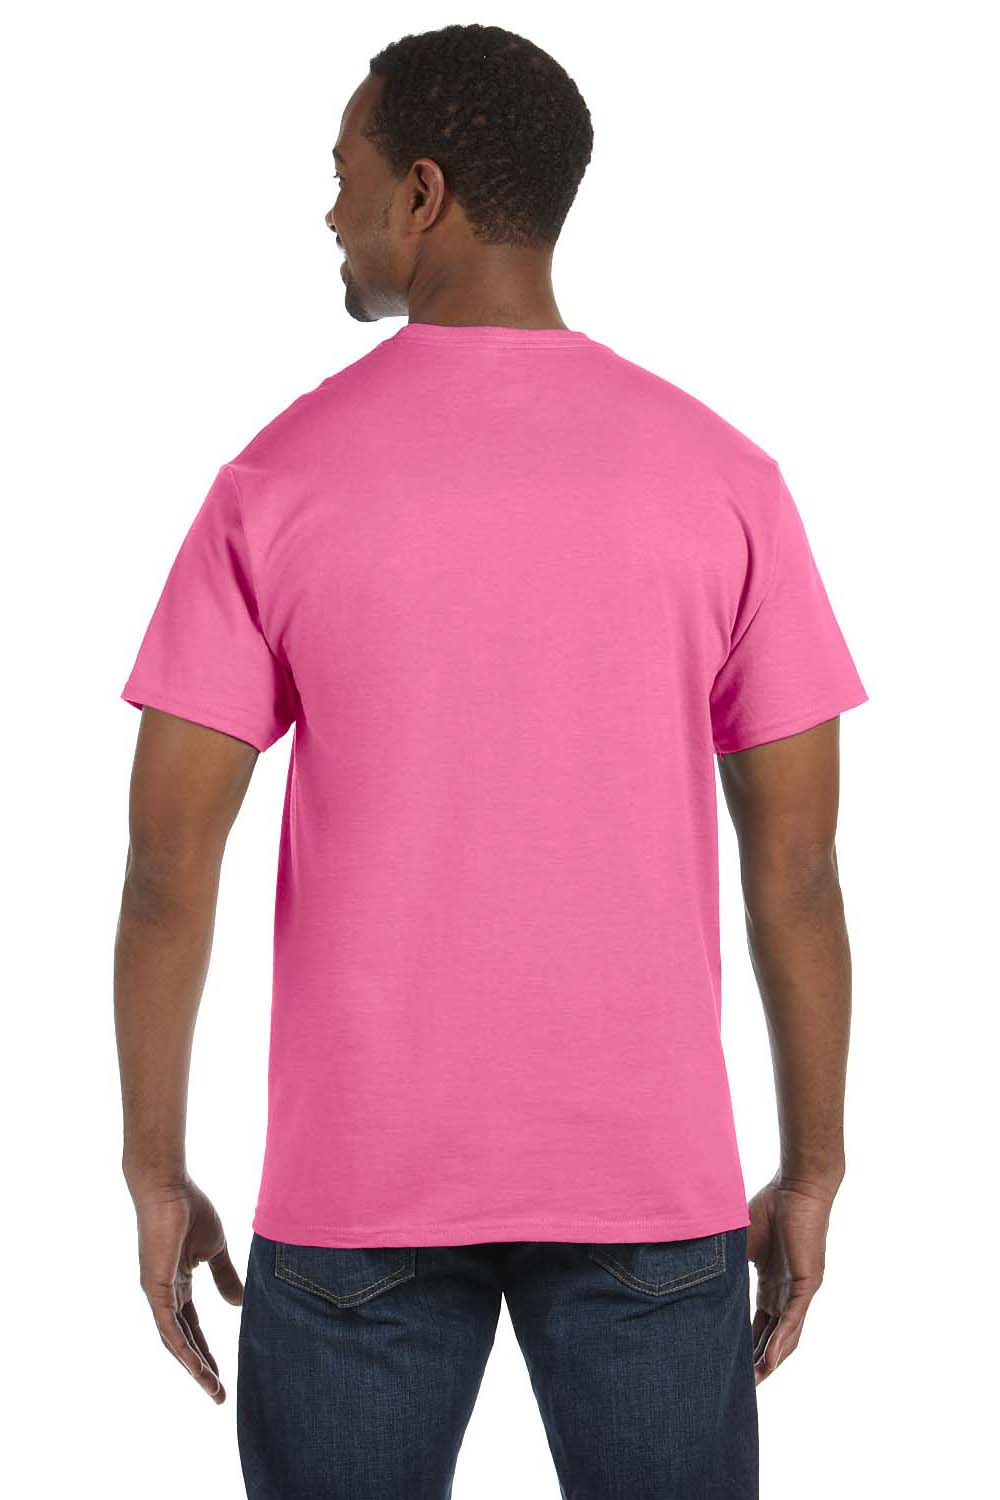 Jerzees 29M Mens Dri-Power Moisture Wicking Short Sleeve Crewneck T-Shirt Neon Pink Back